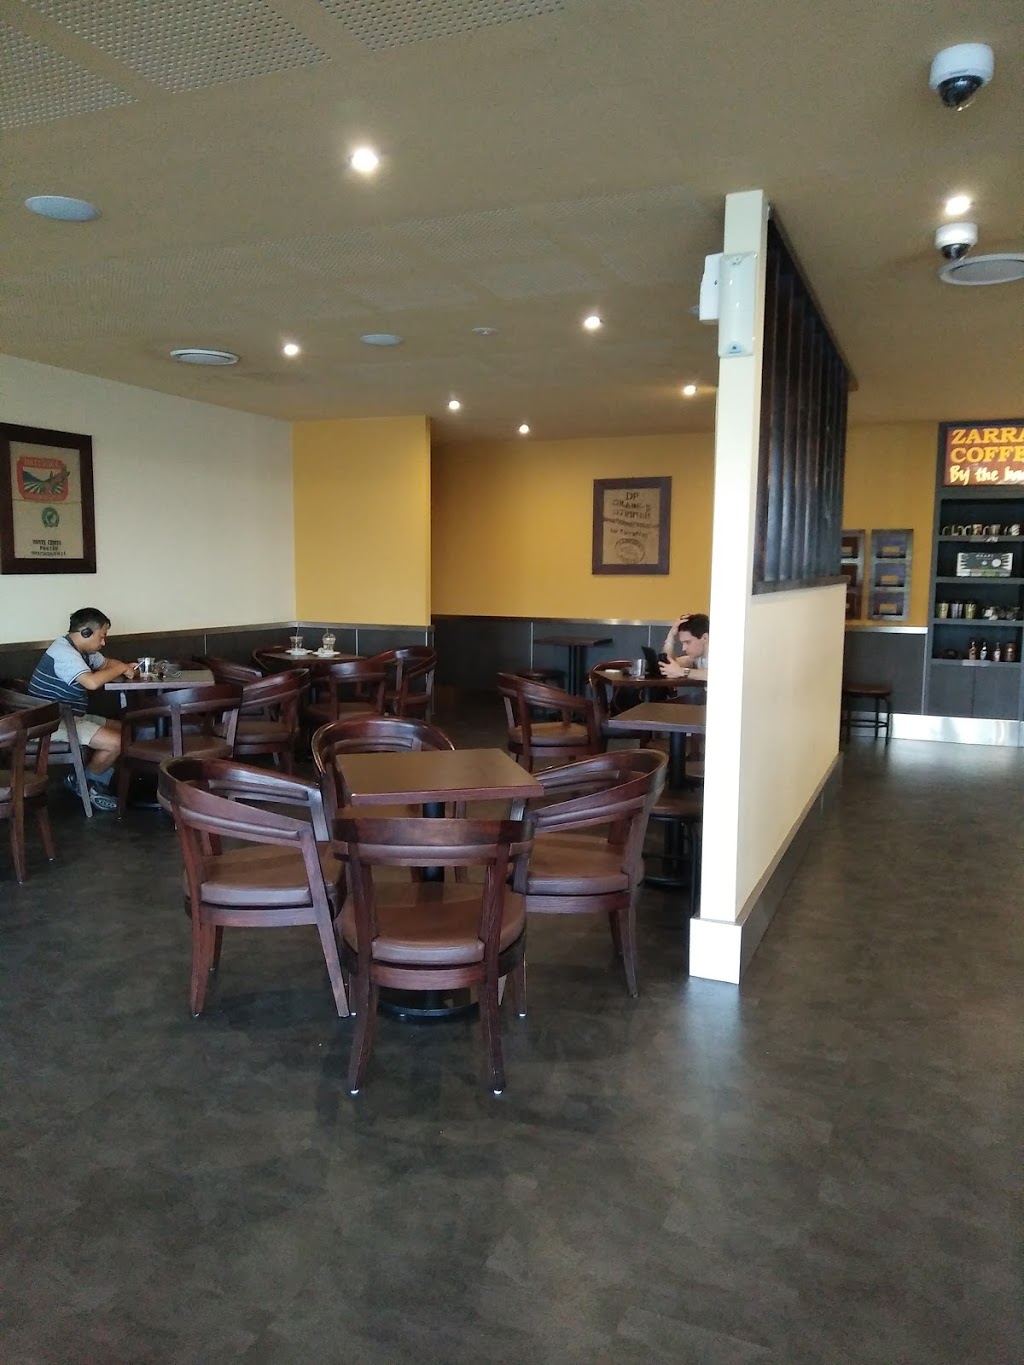 Zarraffas Coffee Acacia Ridge | cafe | 1156 Beaudesert Rd, Acacia Ridge QLD 4110, Australia | 0732727227 OR +61 7 3272 7227